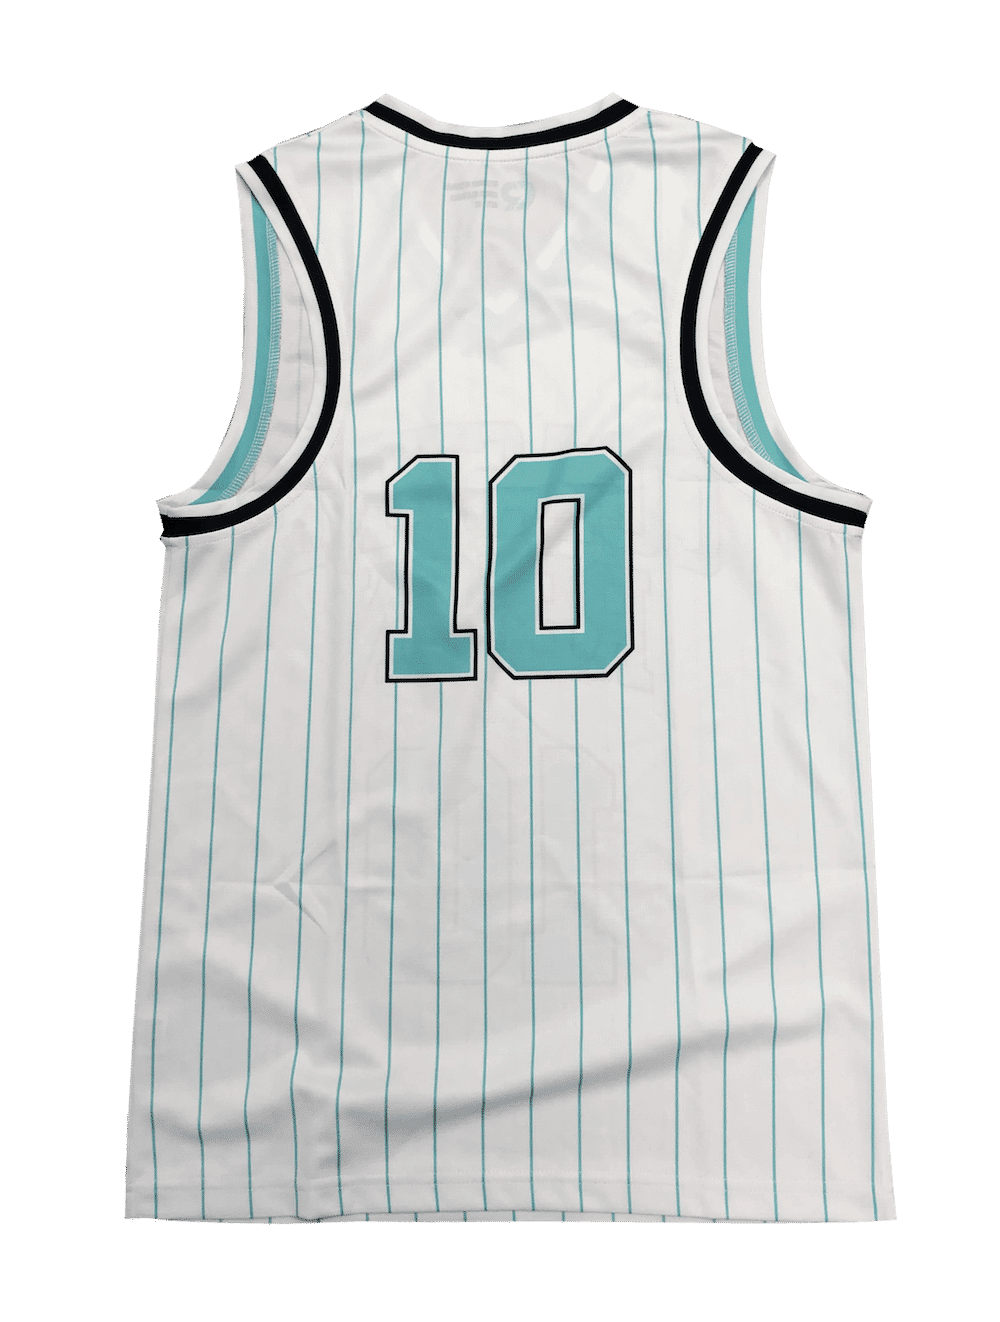 Buy Custom V-Neck Basketball Jerseys Online